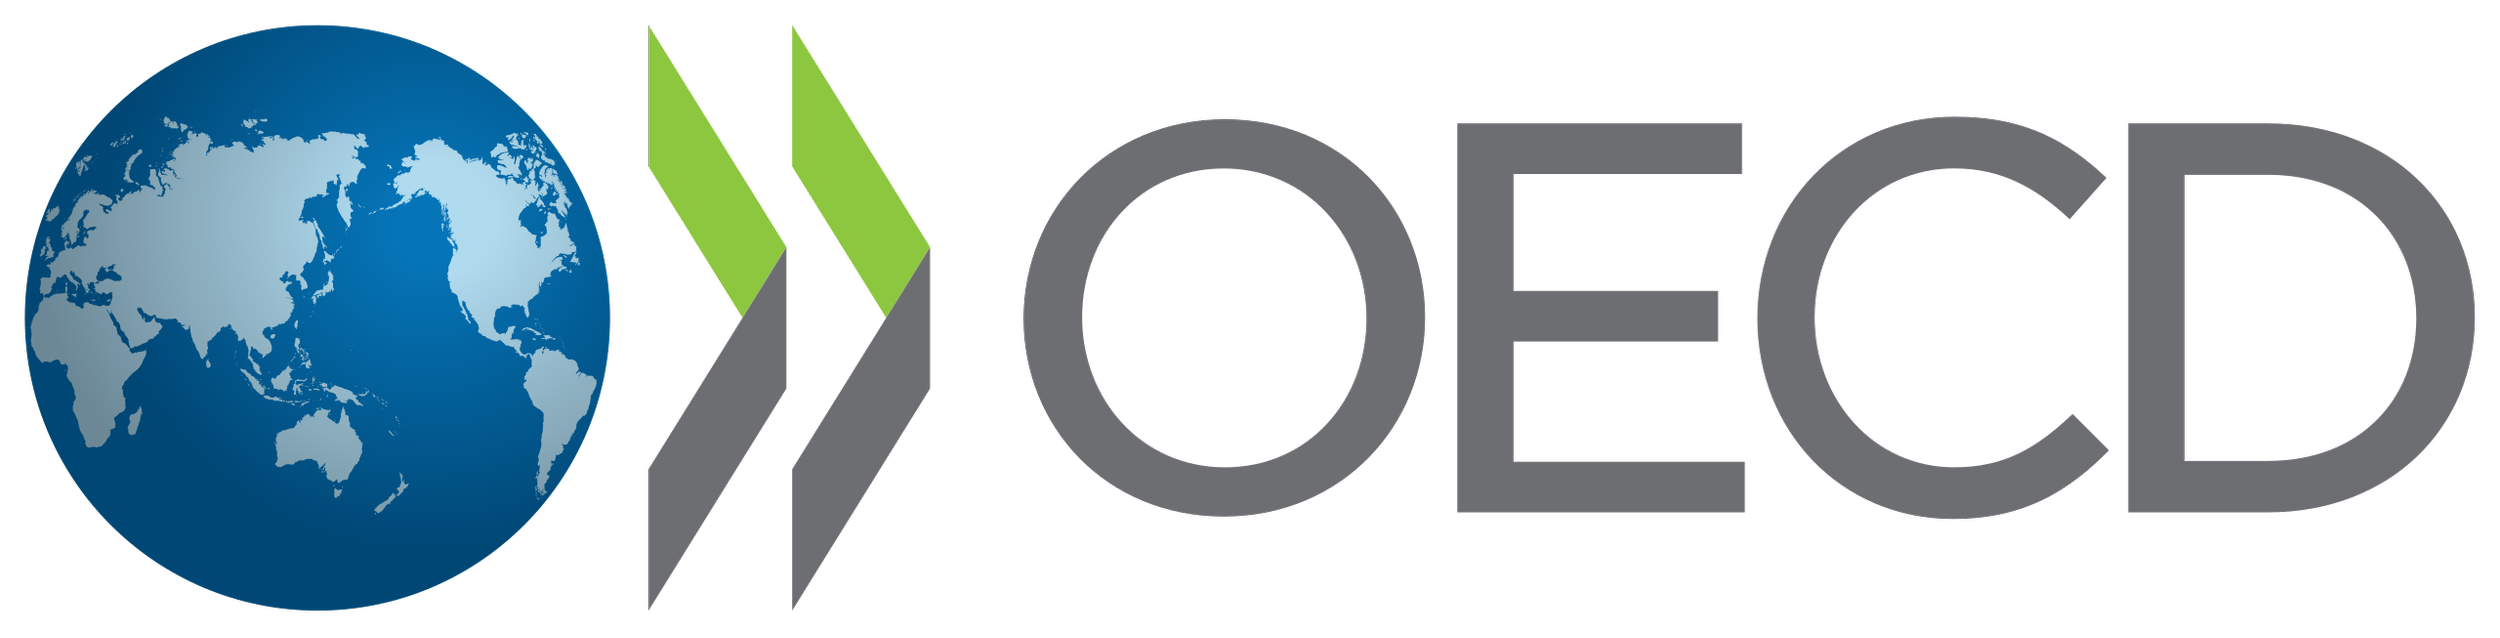 OECD_logo.svg (1).png